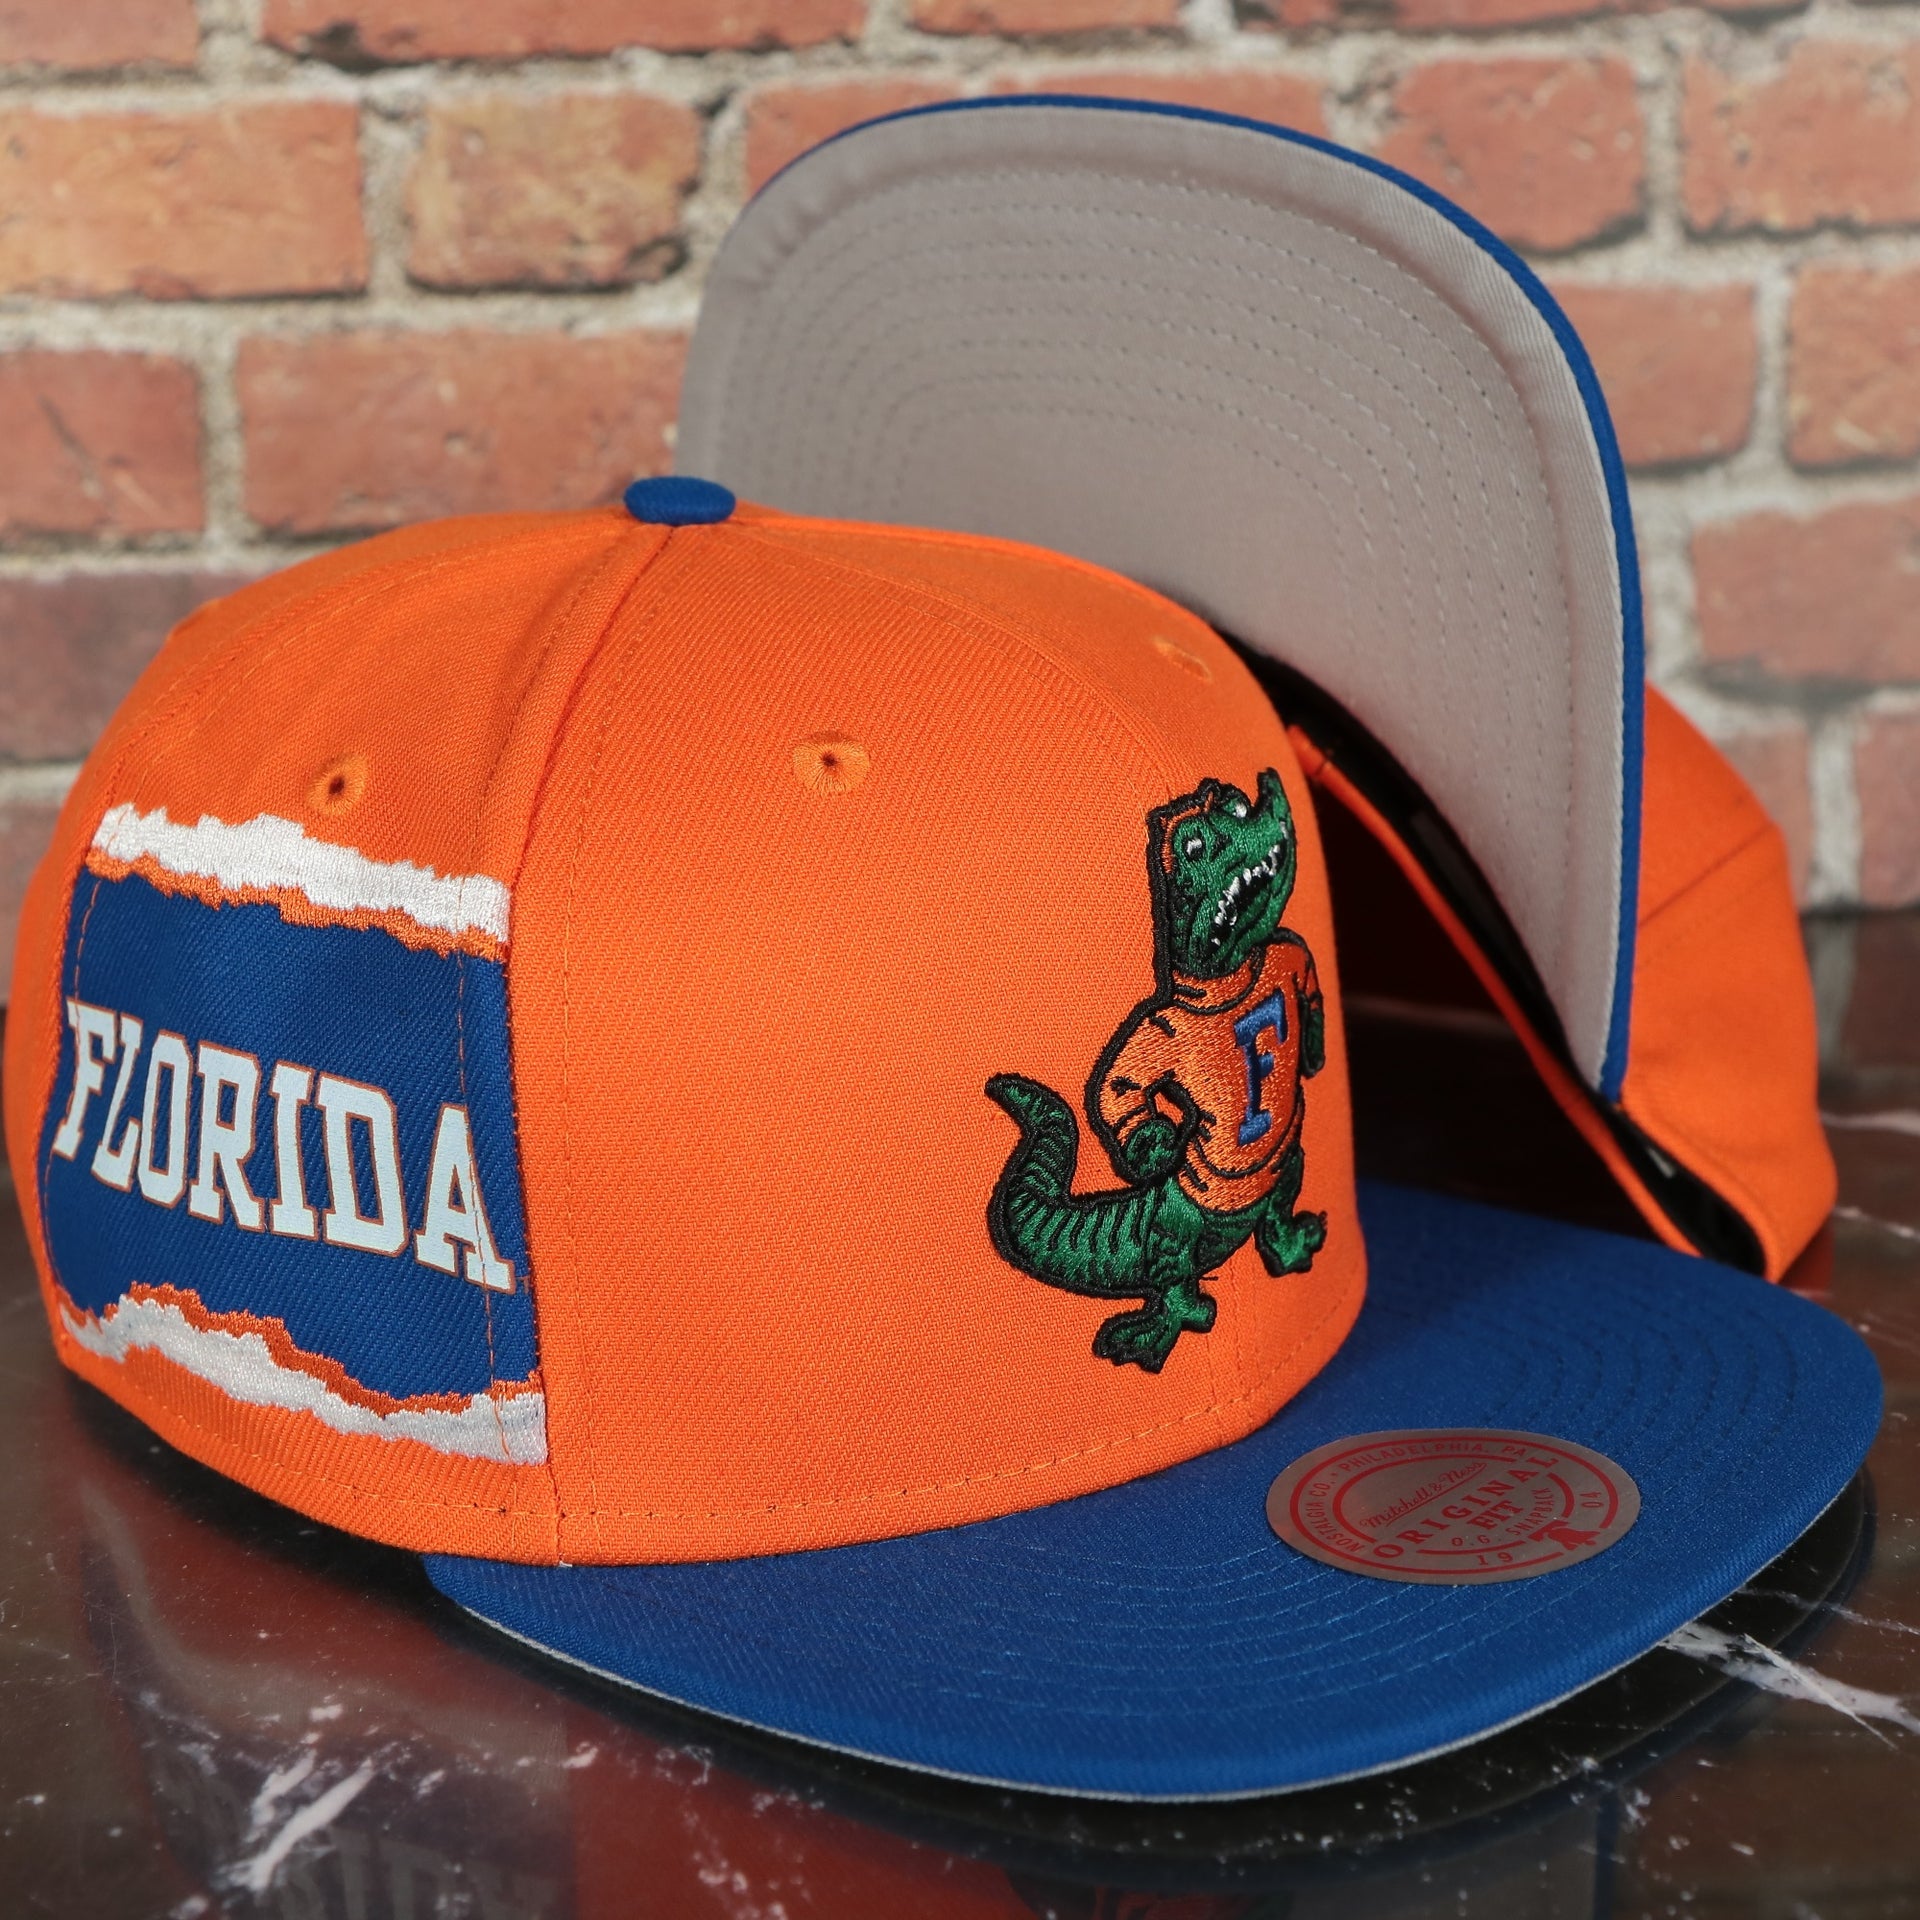 Florida Gators NCAA Jumbotron "Florida" Ripped Wordmark side patch Grey Bottom Yellow/Navy Snapback hat | Mitchell and Ness Two Tone Snap Cap